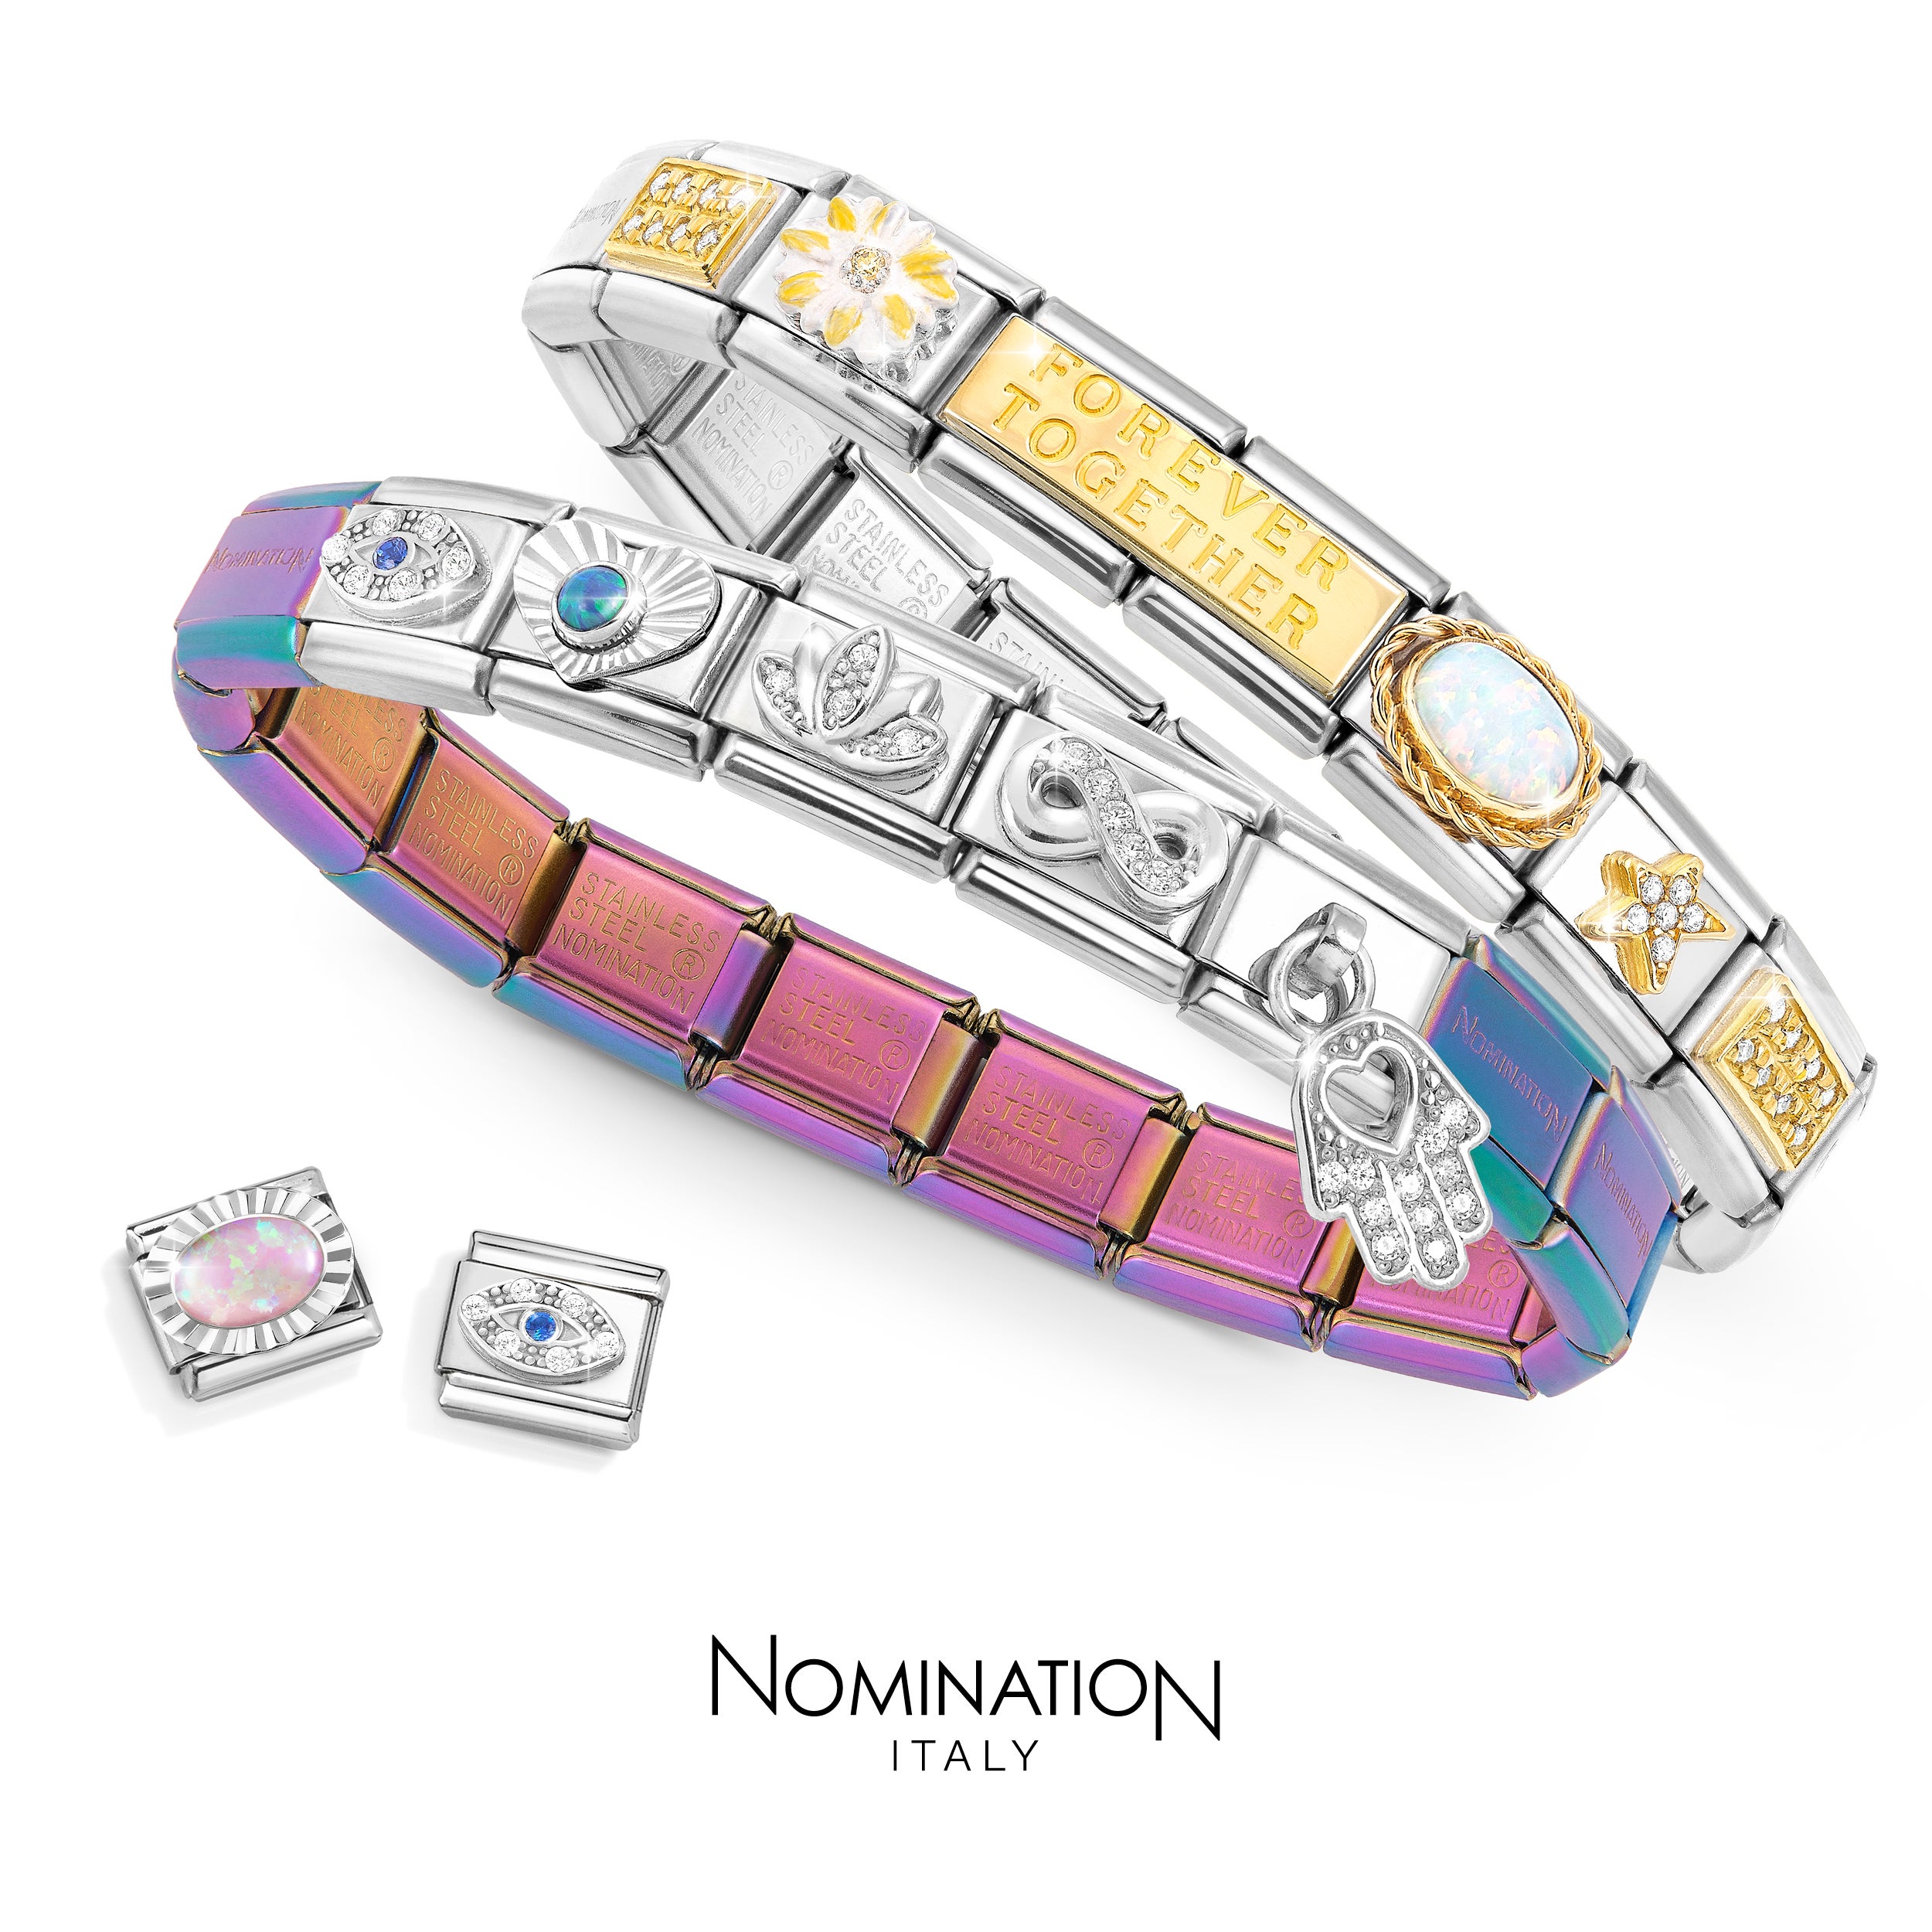 Pin by C͙H͙I͙G͙U͙A͙G͙U͙A͙ on Nomination | Italian charm bracelet, Charm  bracelet, Jewelry